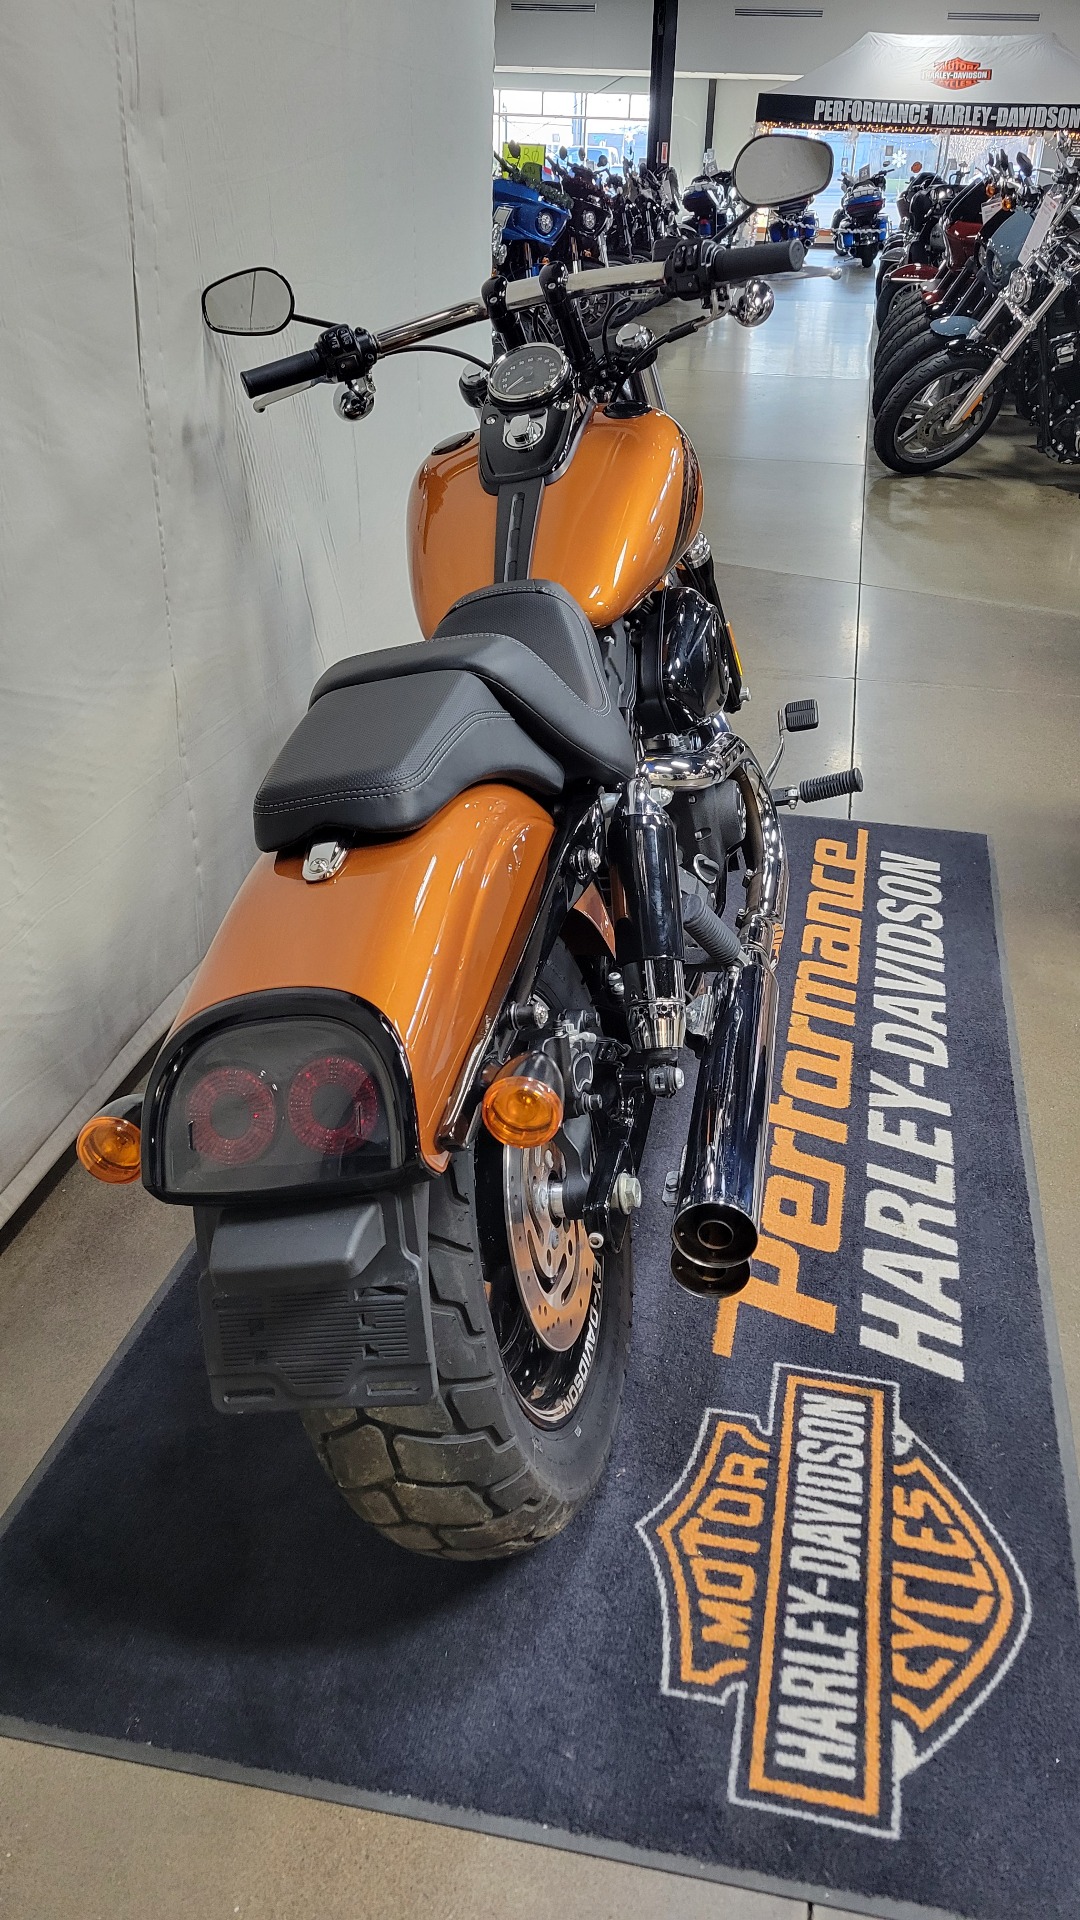 2014 Harley-Davidson Dyna® Fat Bob® in Syracuse, New York - Photo 3